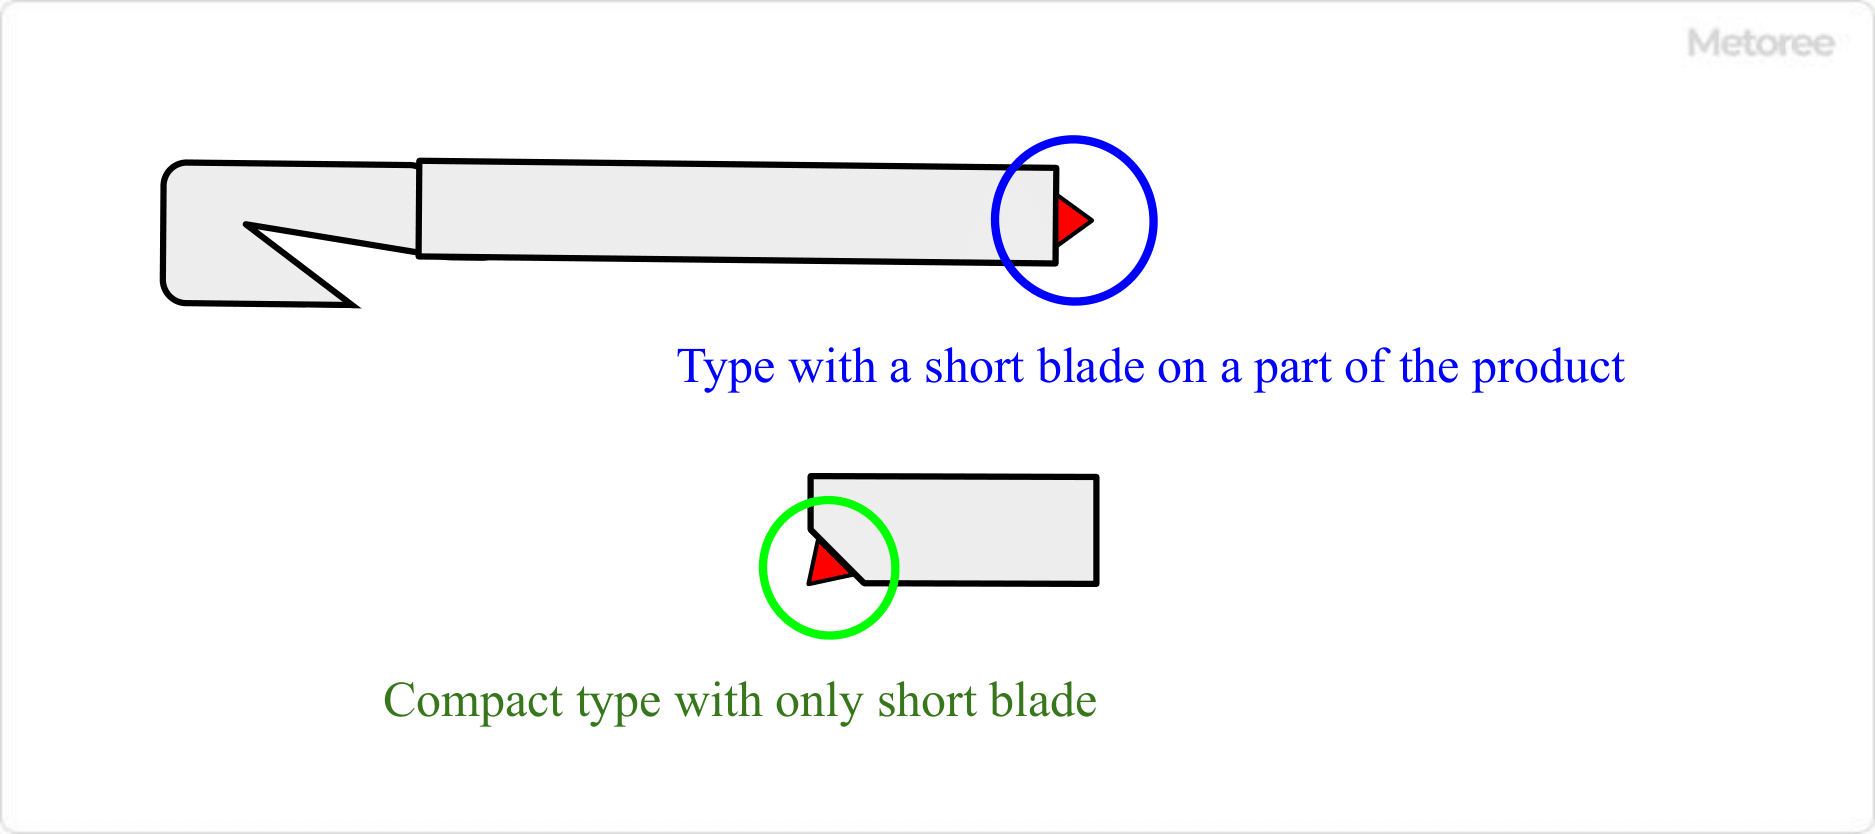 Slice: Box Cutter Blades (Pointed Tip) - SRV Damage Preventions